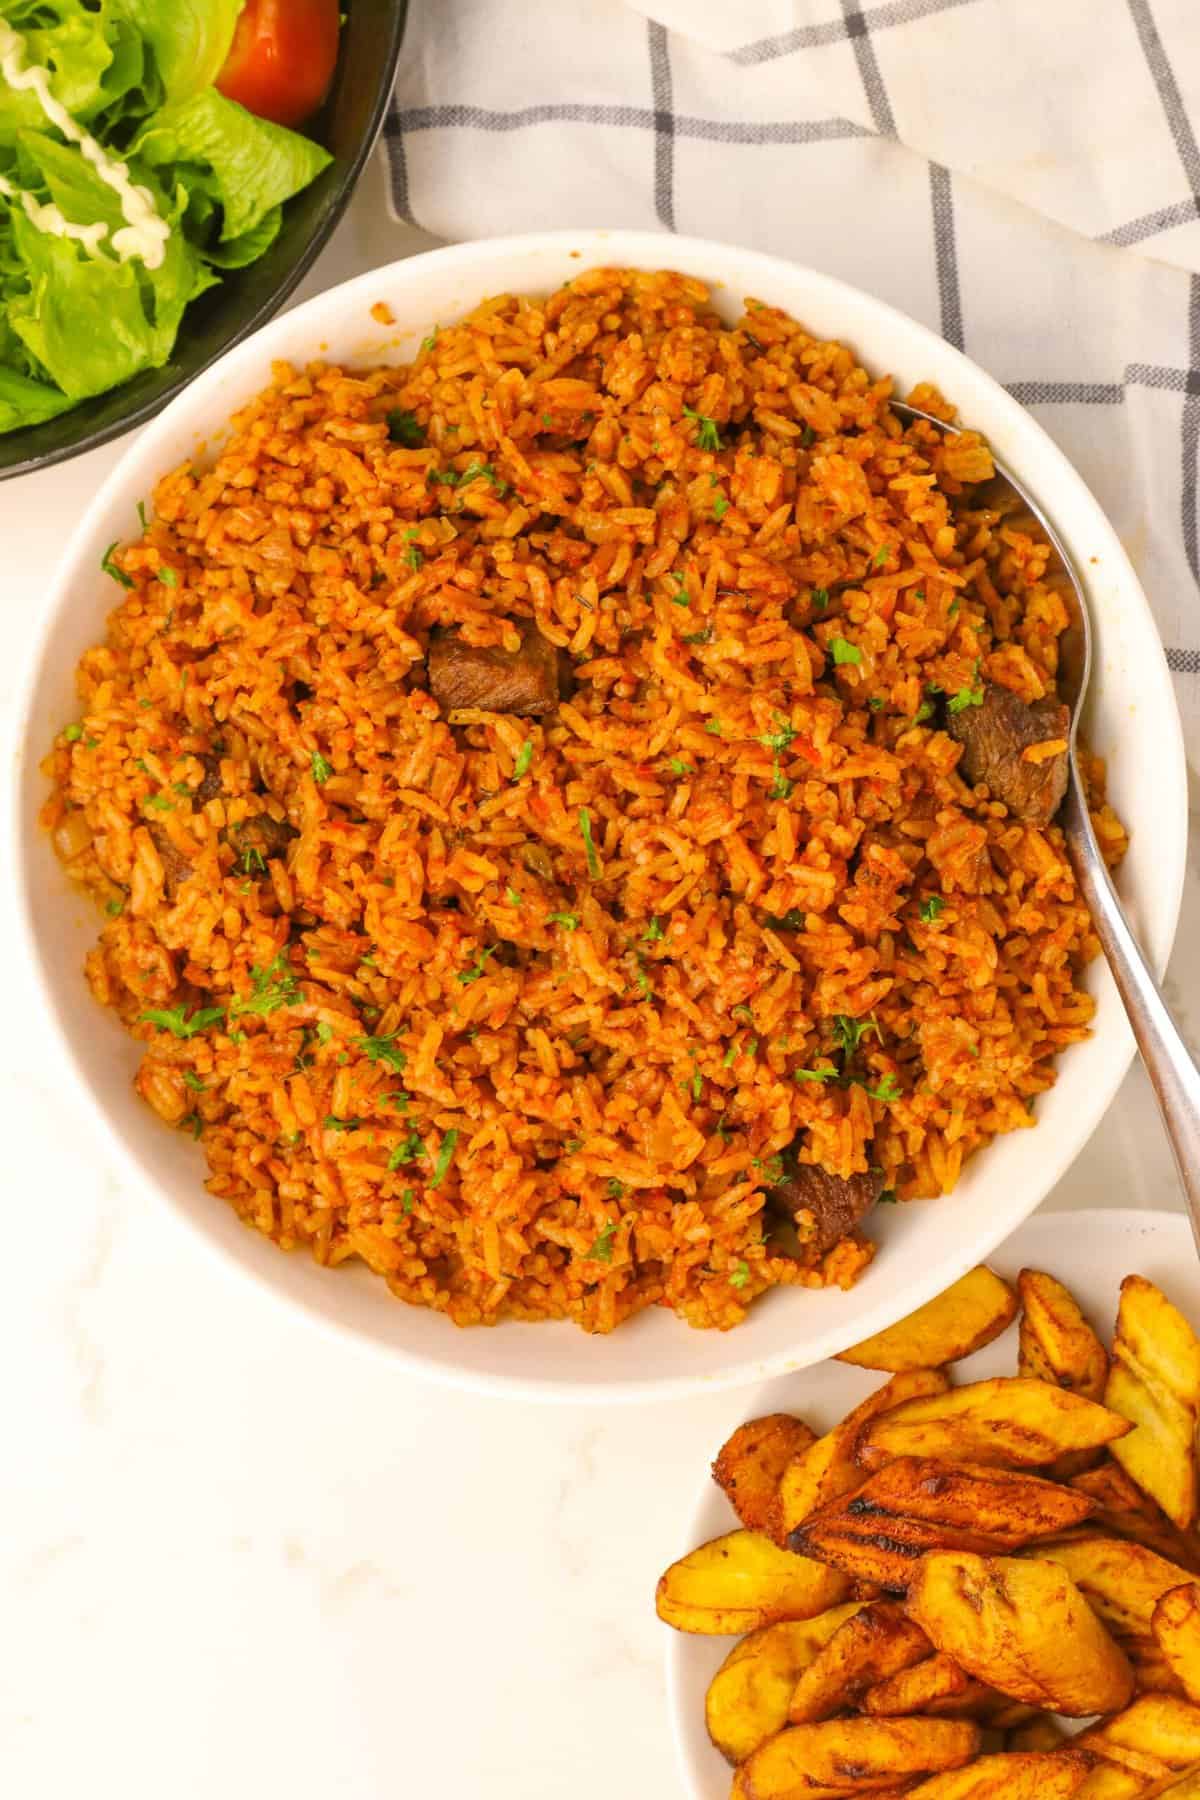 Serving up a bowl of soul-satisfying Ghana jollof rice